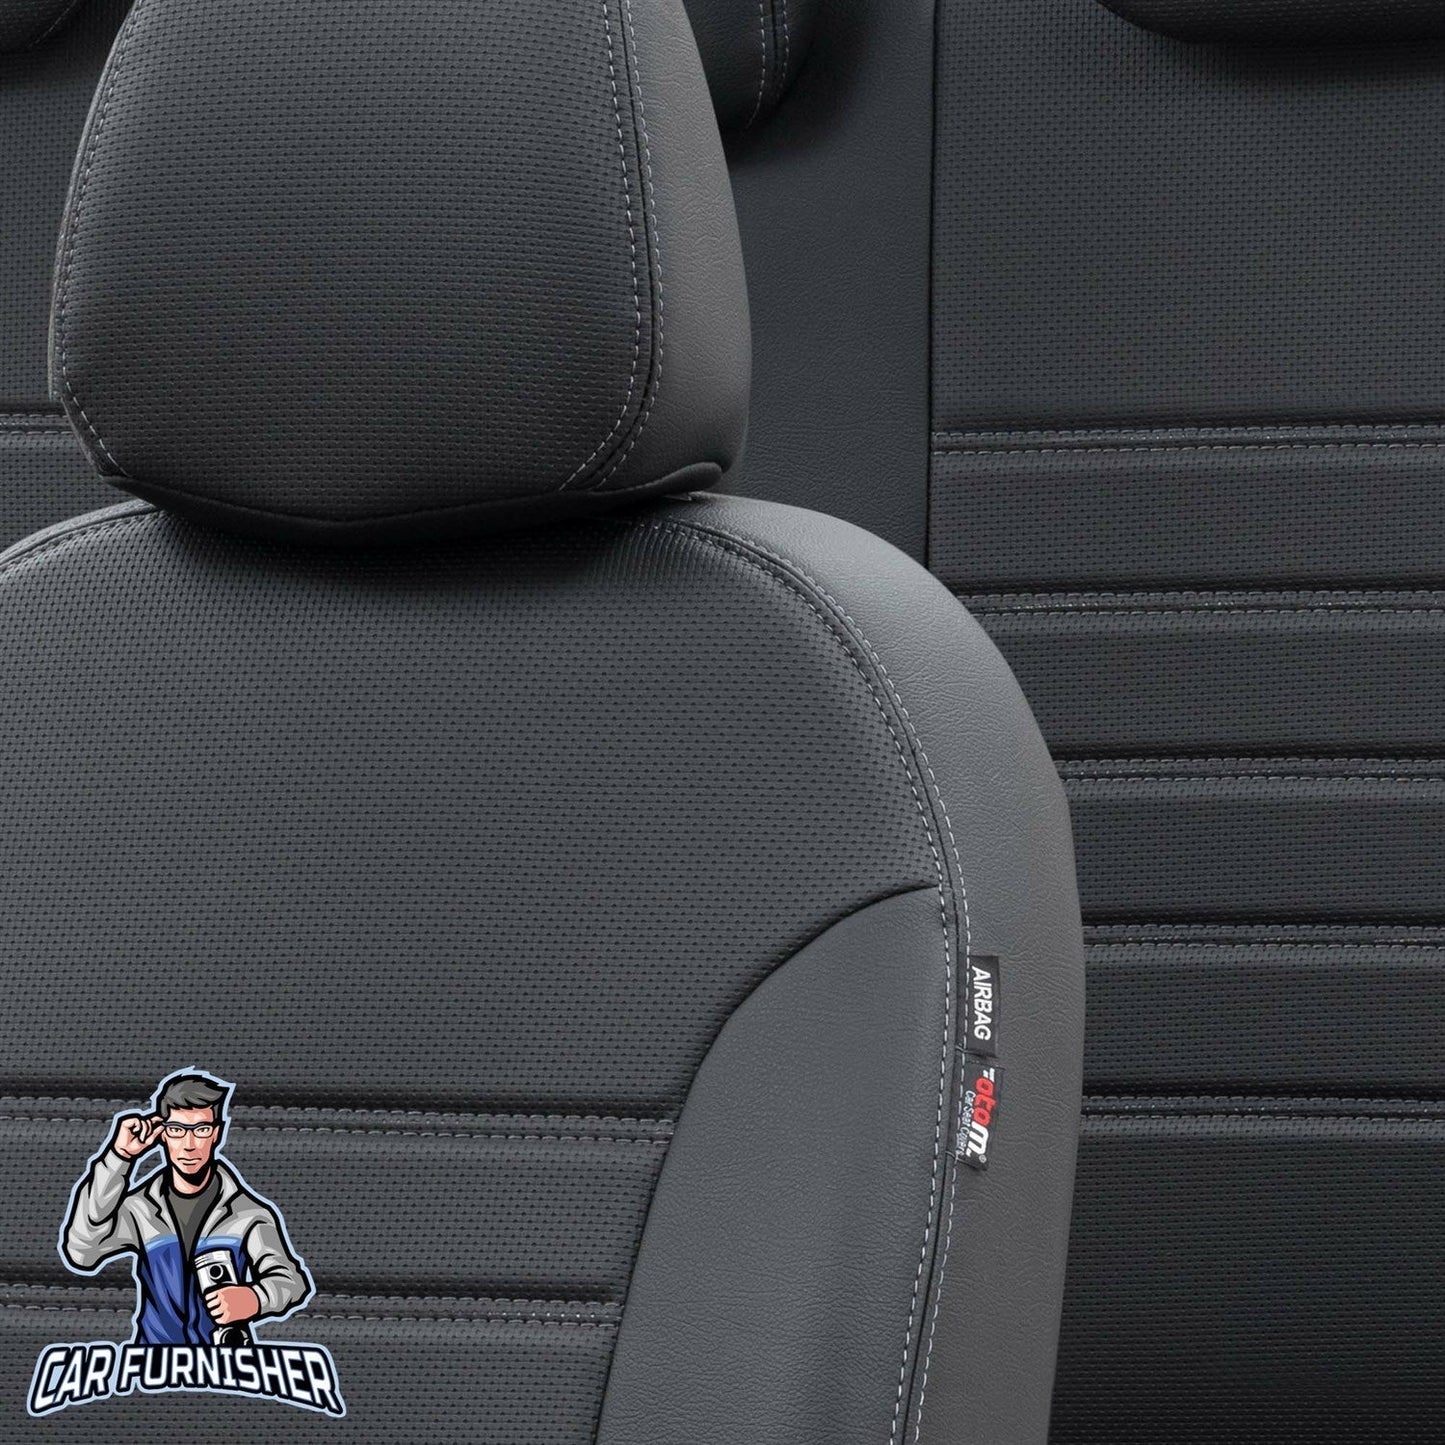 Honda CRV Seat Covers New York Leather Design Black Leather